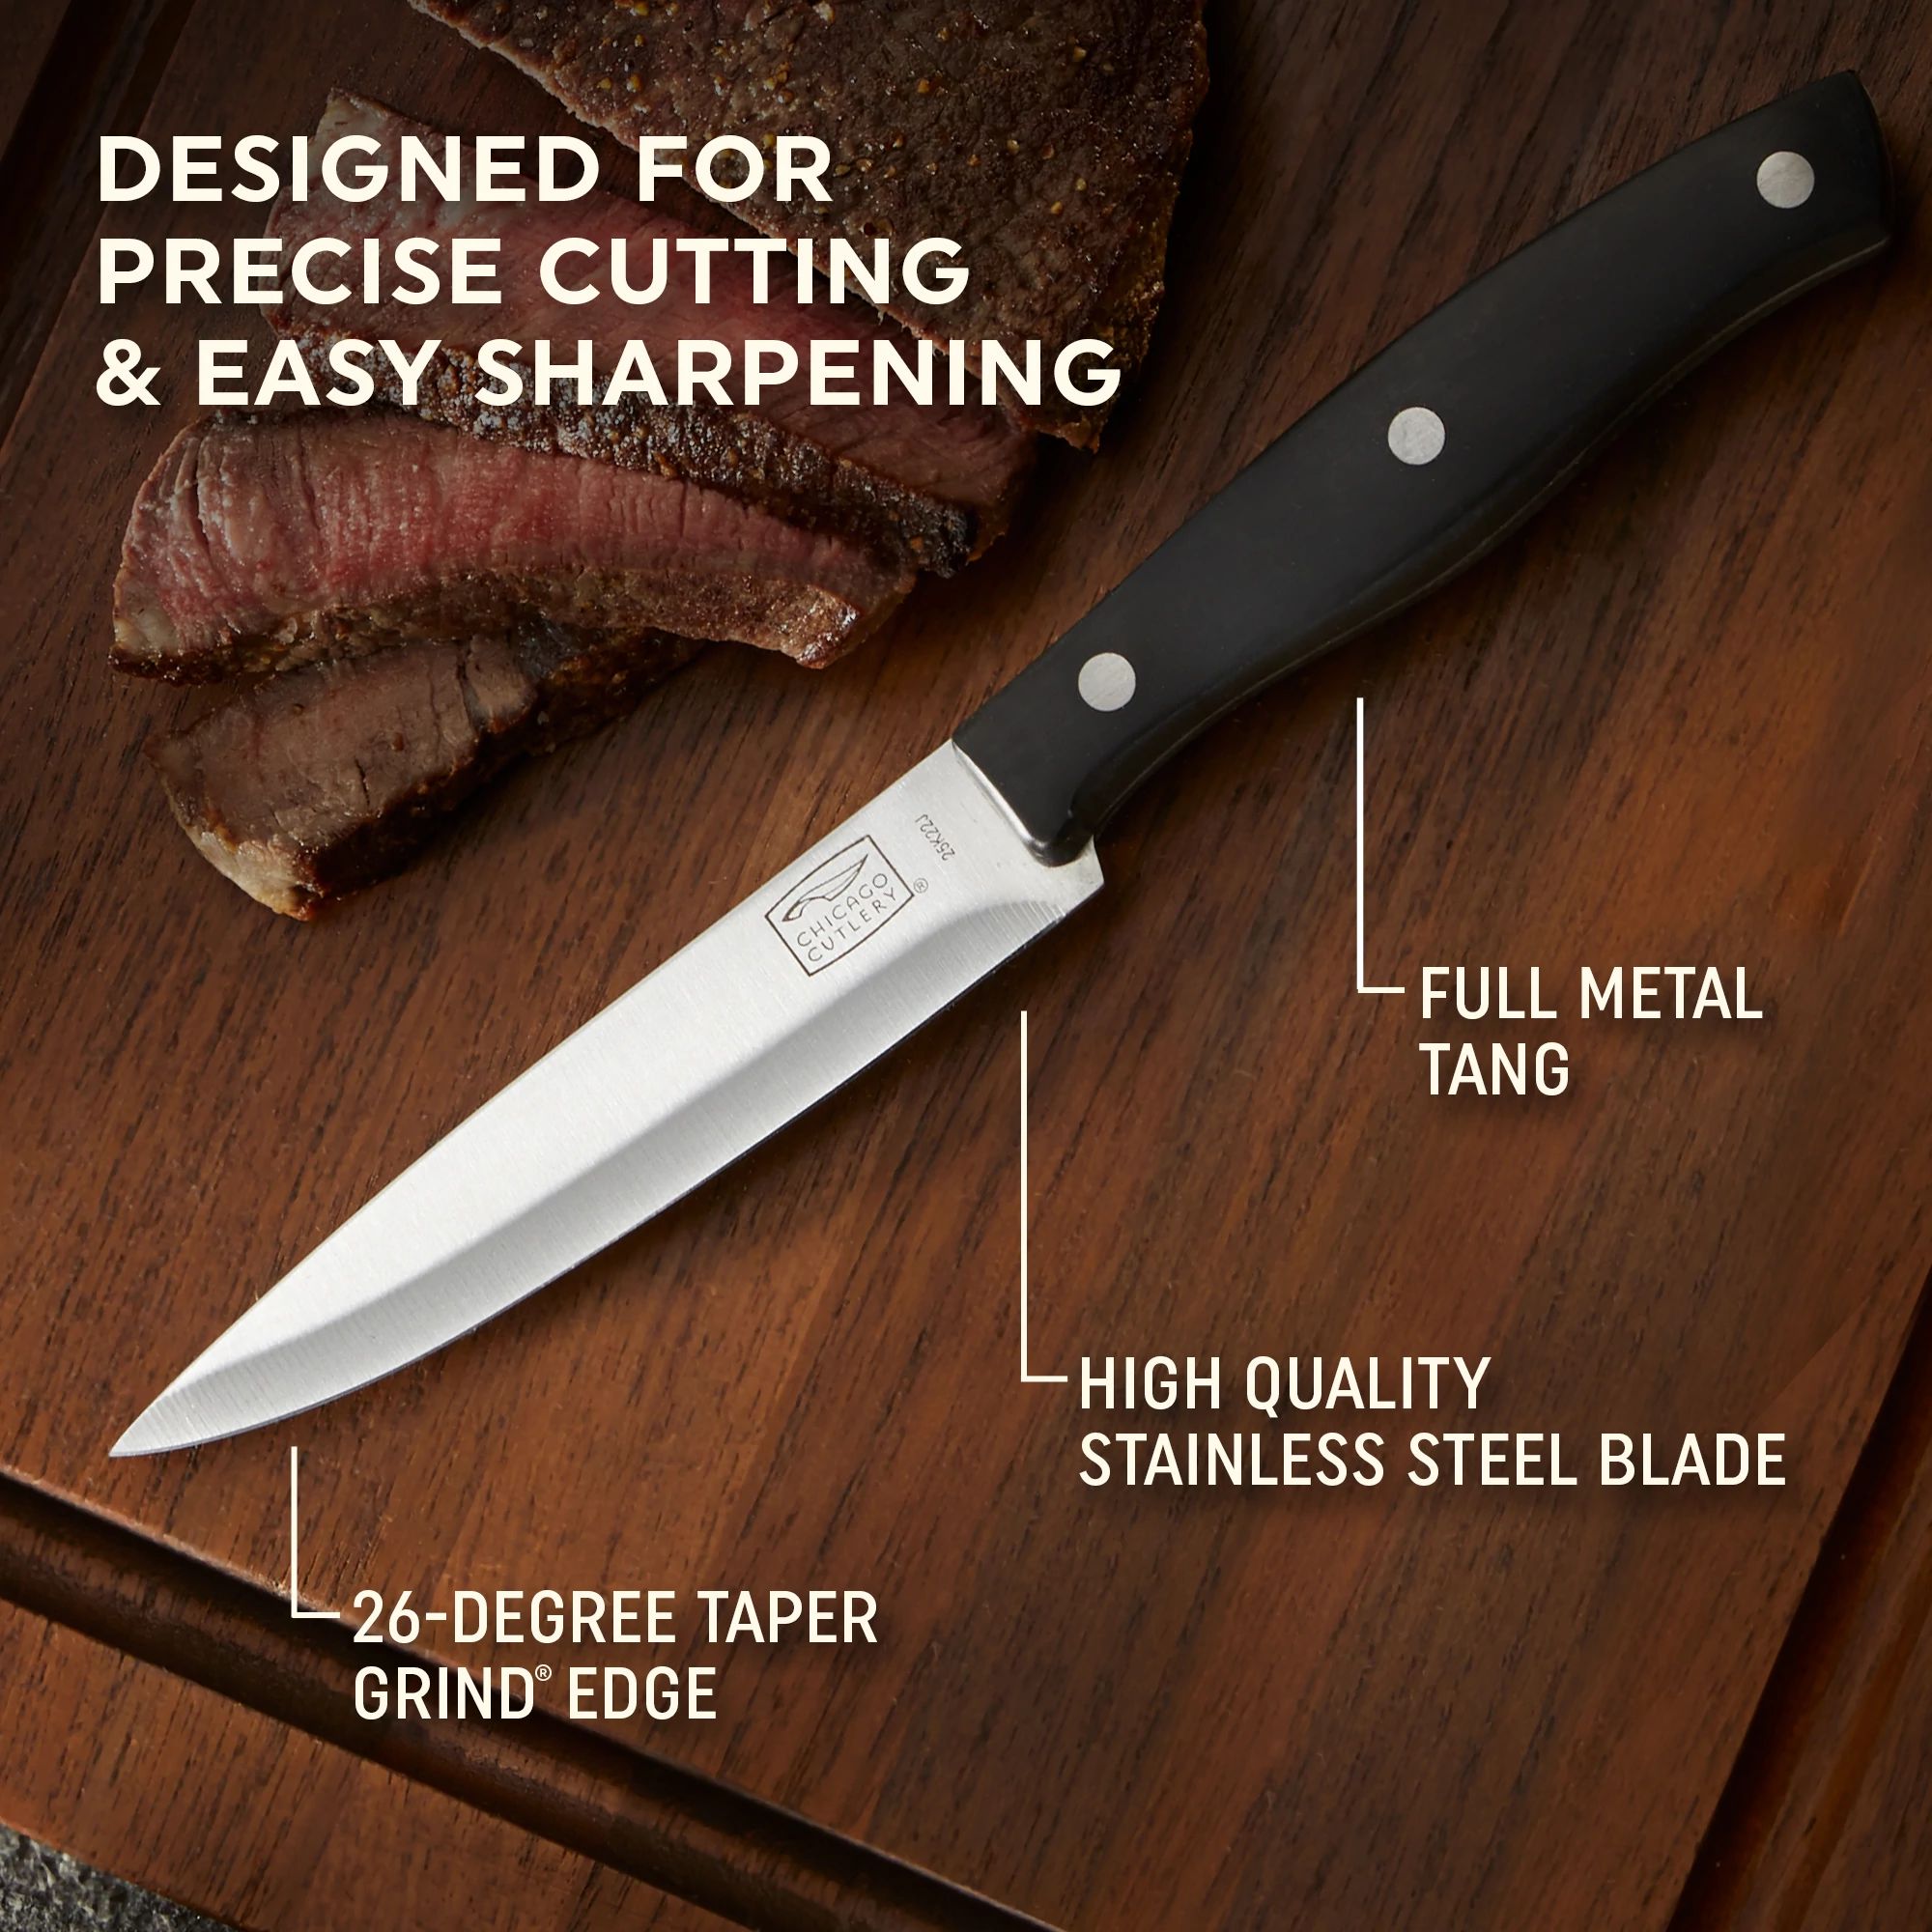 Chicago Cutlery B144 4pc Walnut Tradition Steak Knife Set